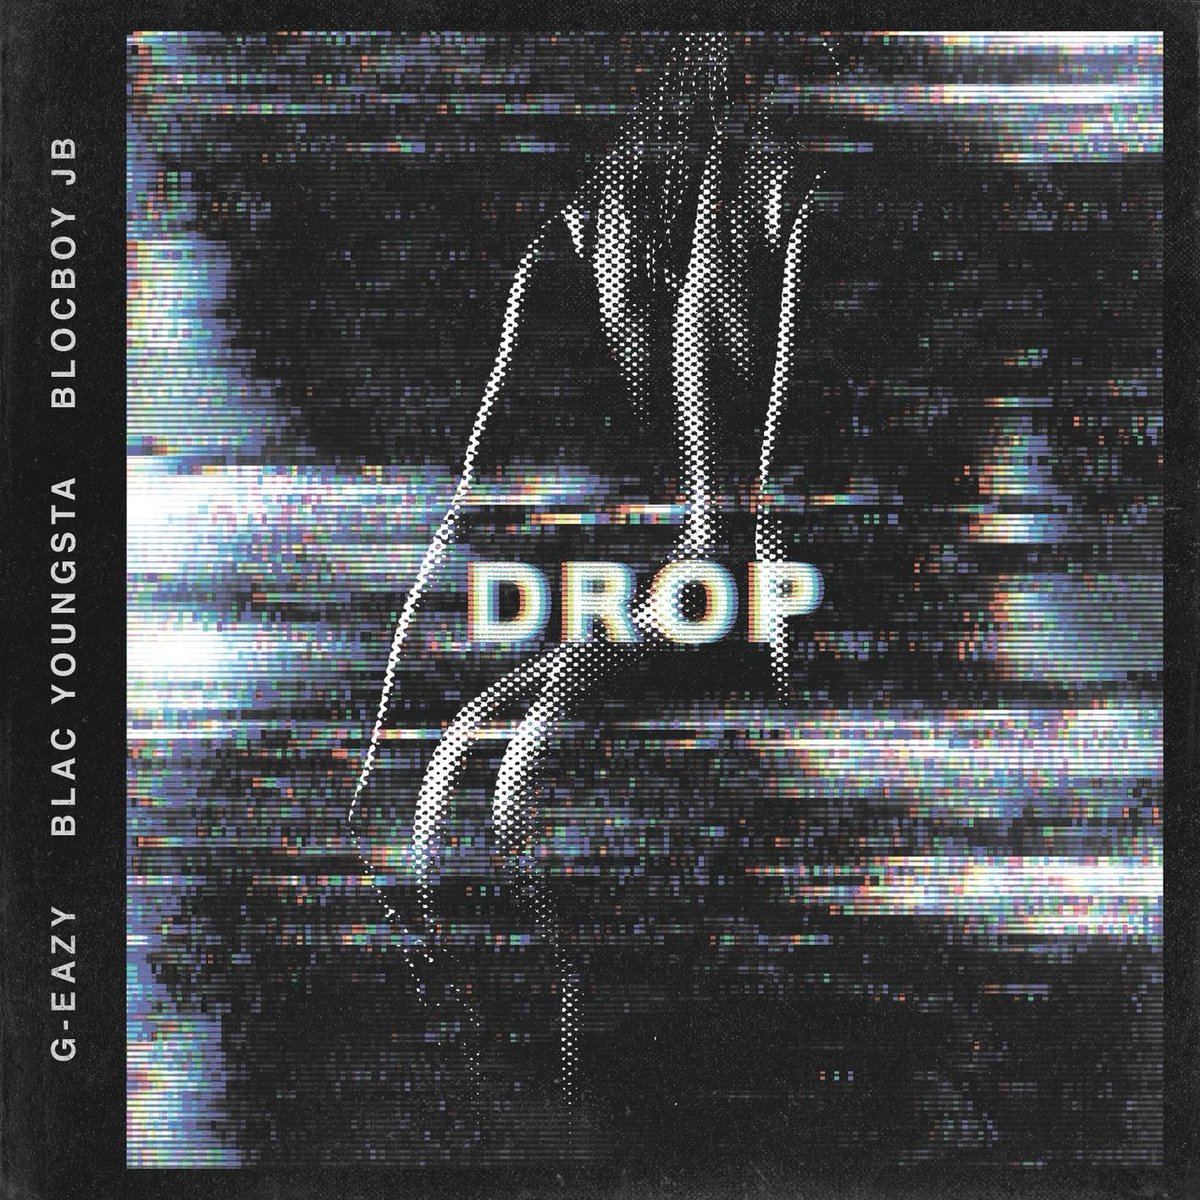 New Music: G-Eazy – “Drop” Feat. Feat. Blac Youngsta & BlocBoy JB [LISTEN]